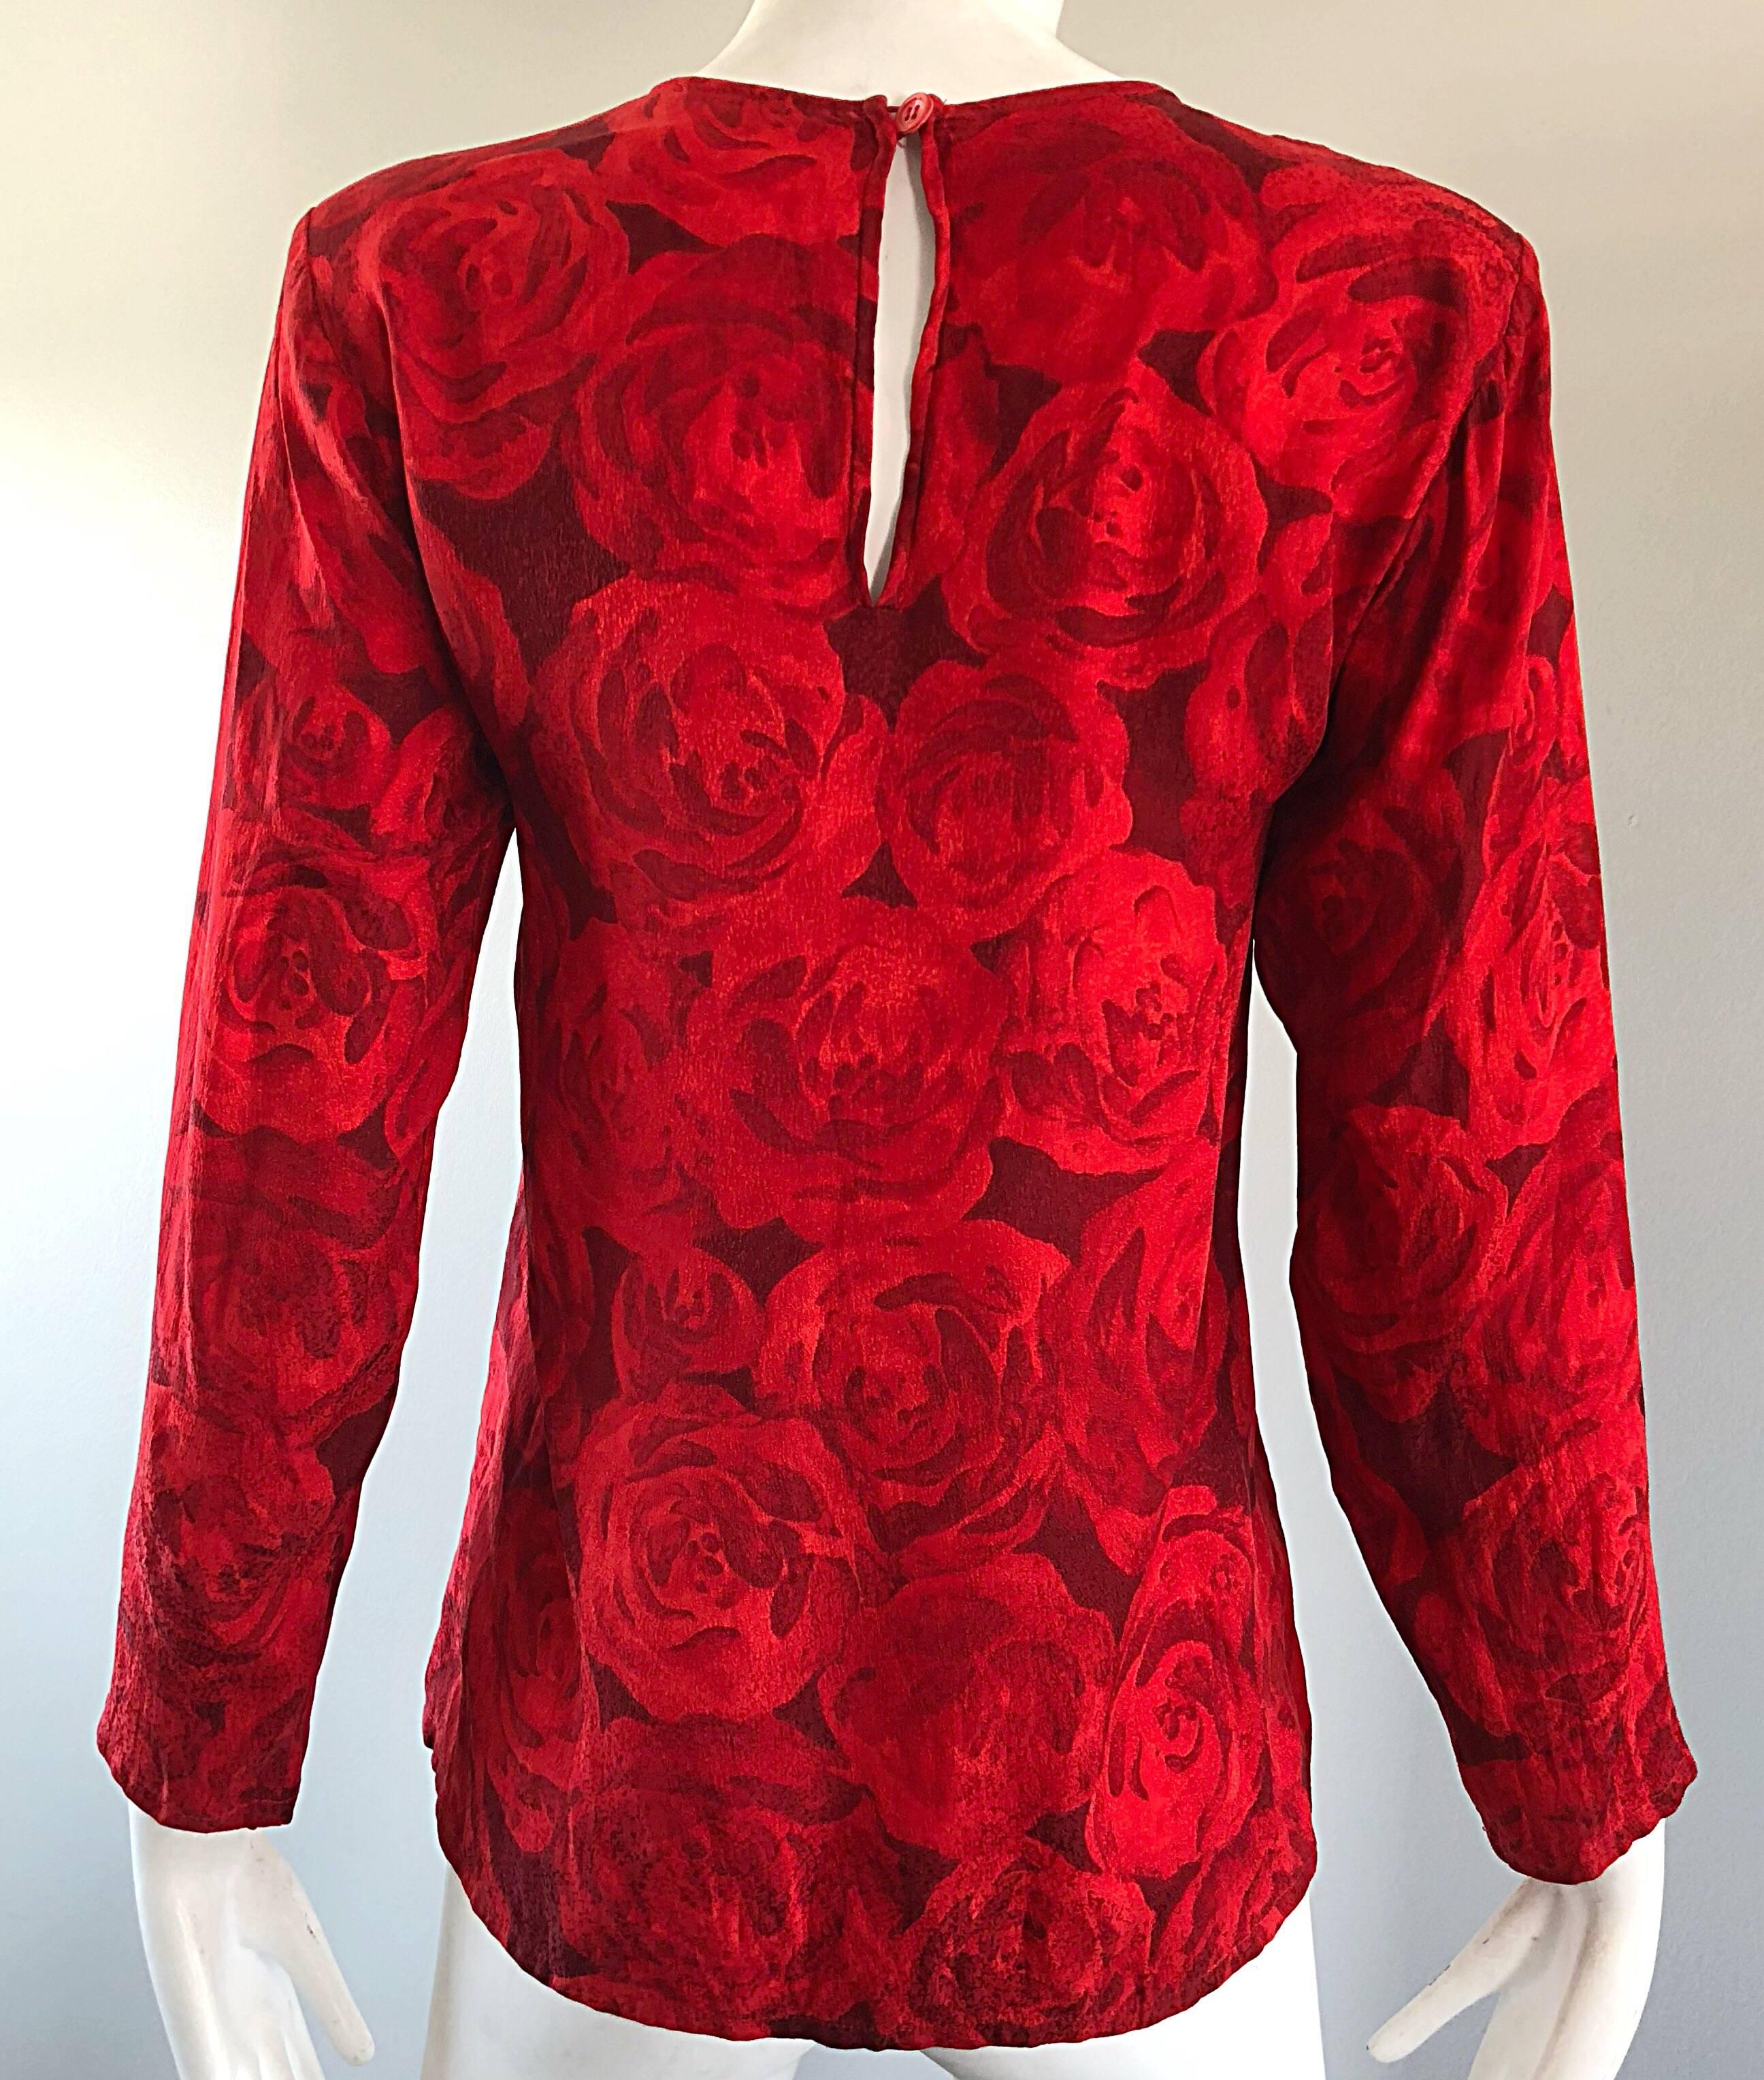 1990s Yves Saint Laurent Rive Gauche Rose Print Red Silk Vintage 90s Blouse Top 7